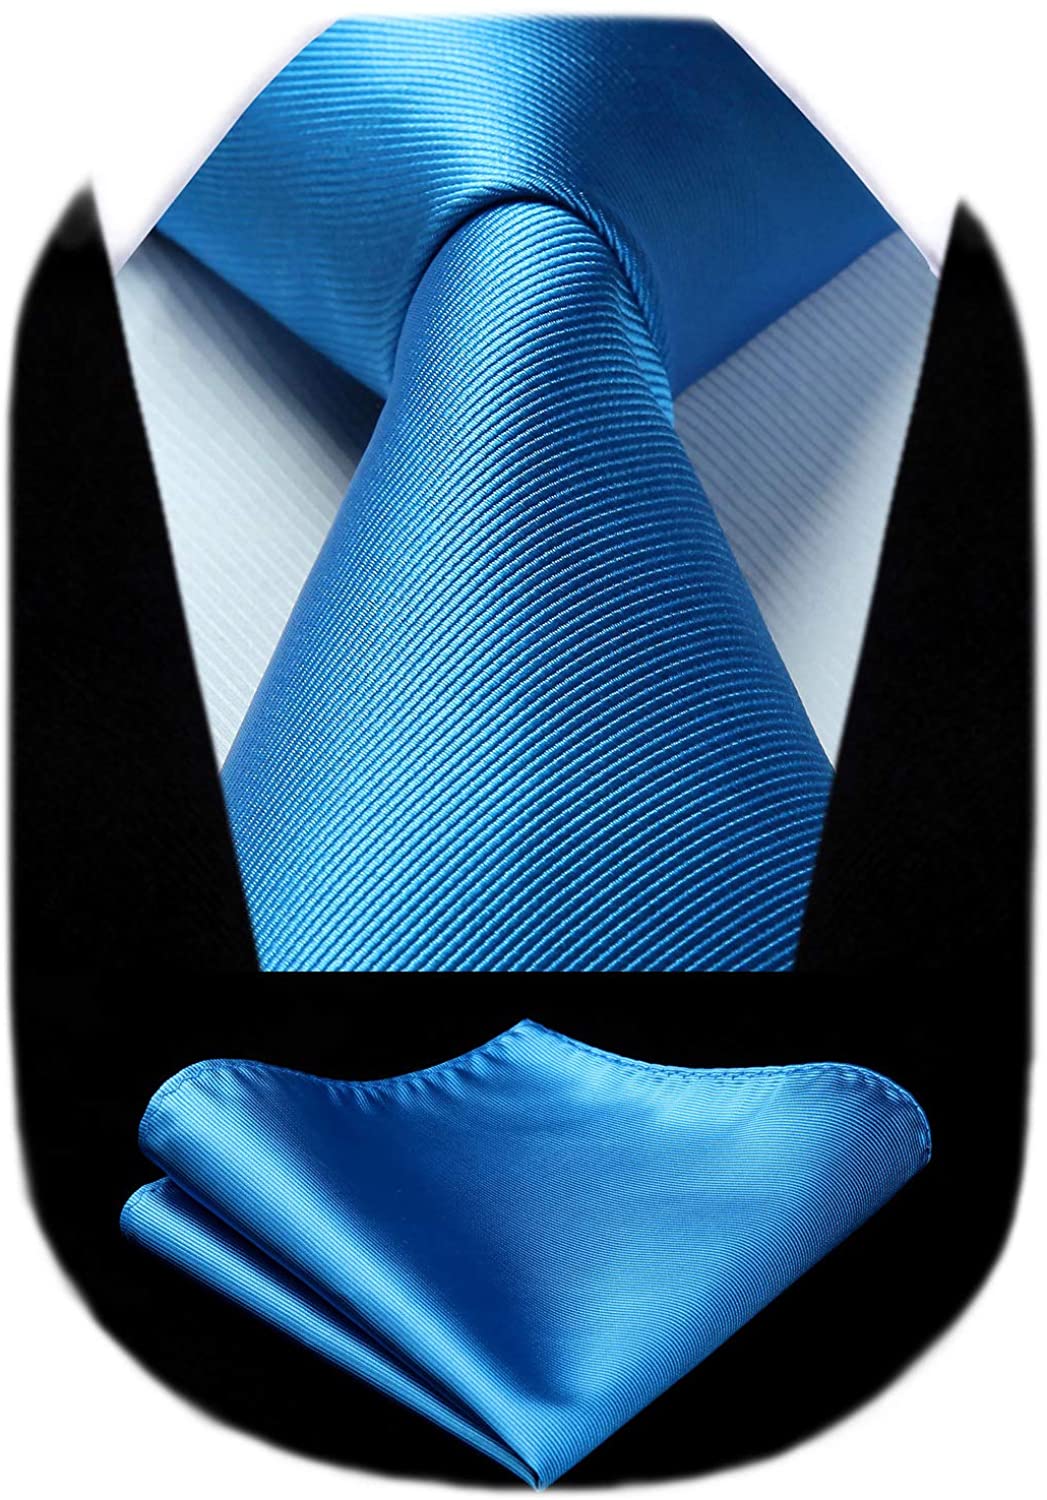 Business Tie and Pocket Square Set Classy Satin Woven Wedding Tie HISDERN Solid Color Ties for Men Formal 3.35 Necktie 